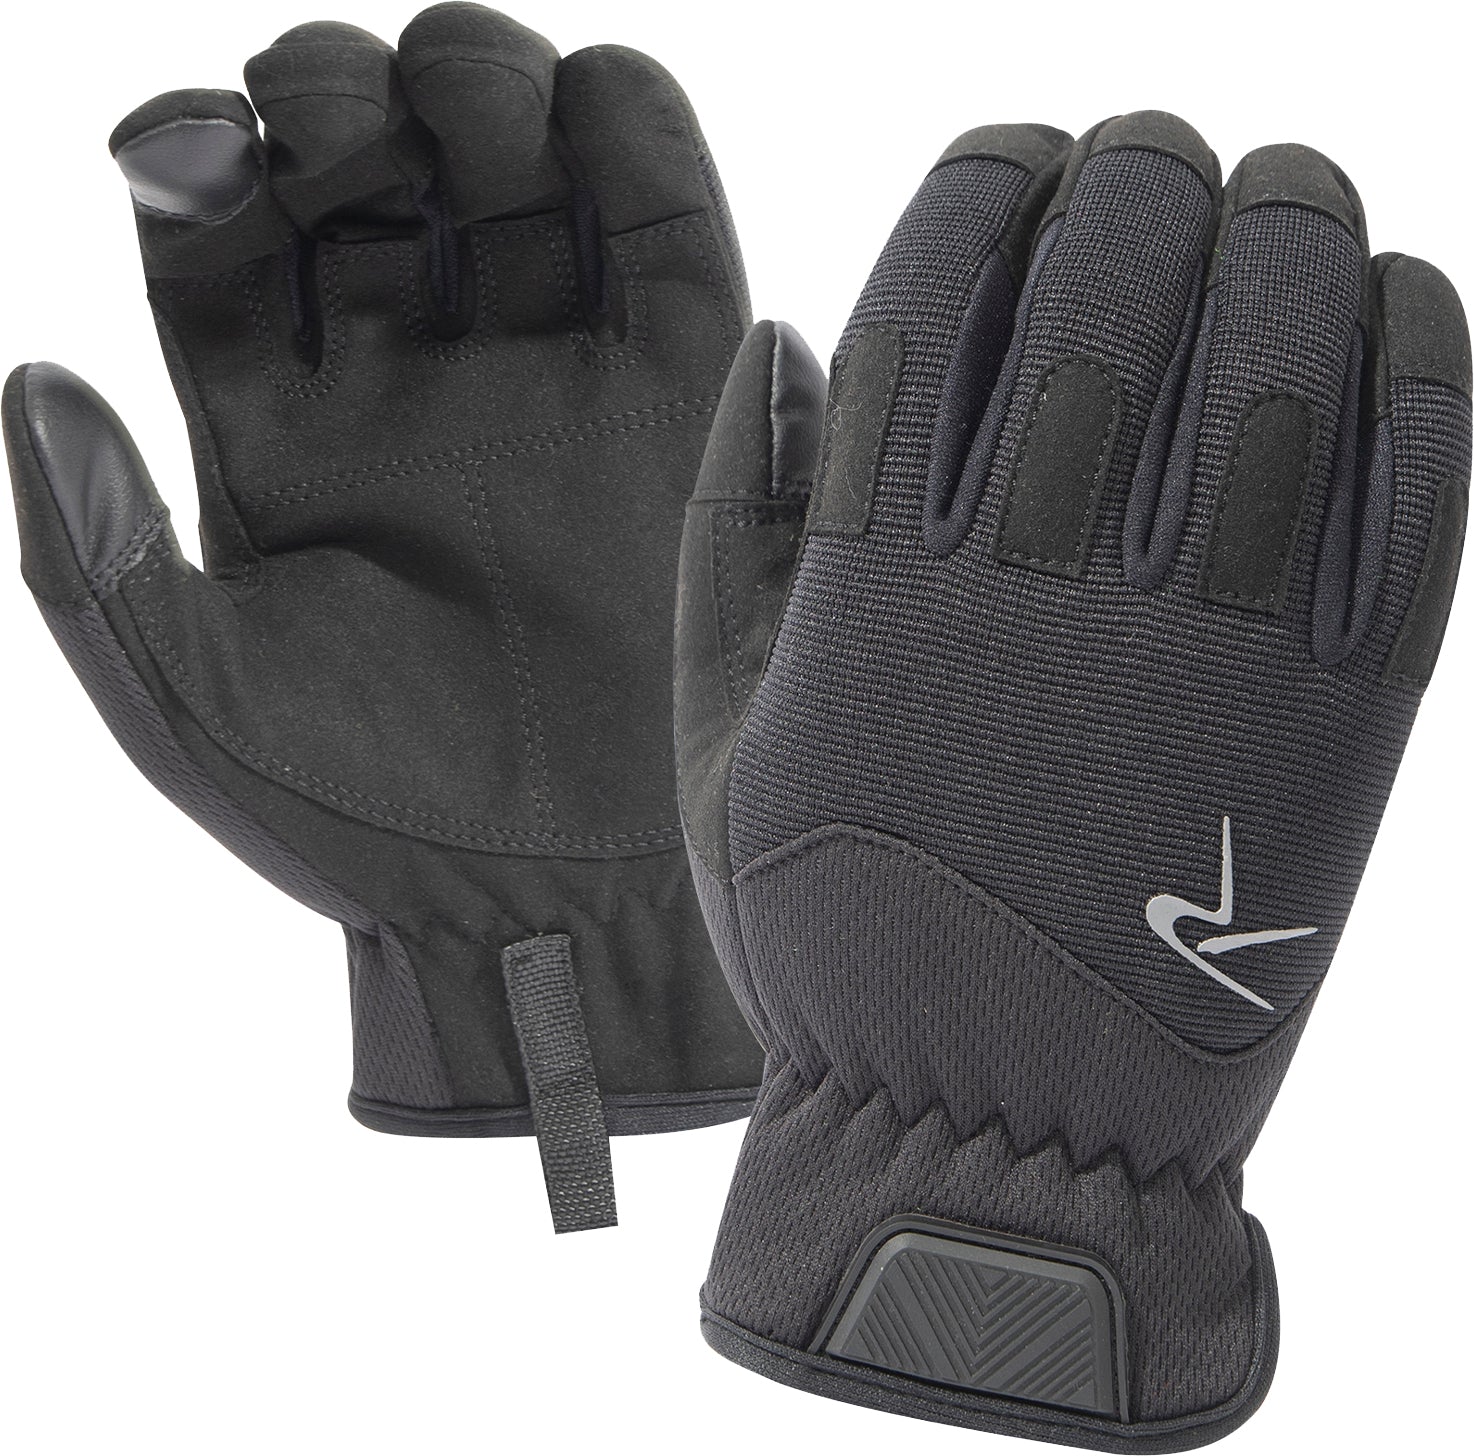 Black - Rapid Fit Duty Gloves